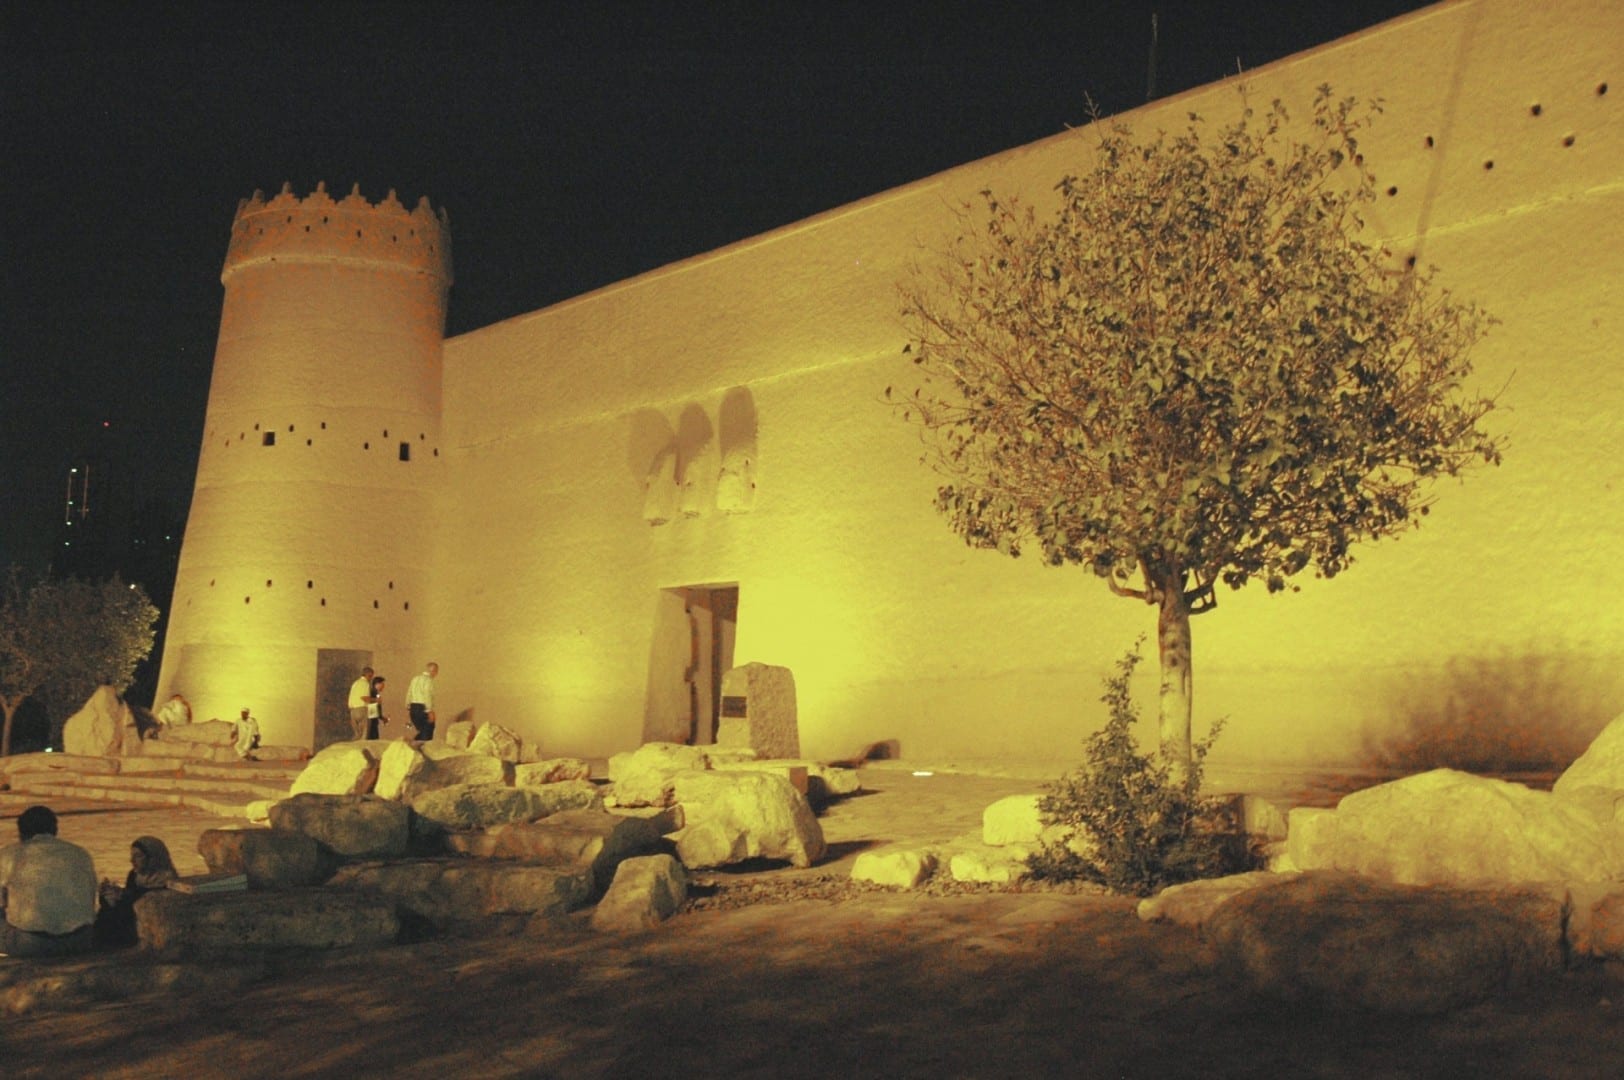 La Fortaleza de Masmak iluminada por la noche Riyadh Arabia Saudí